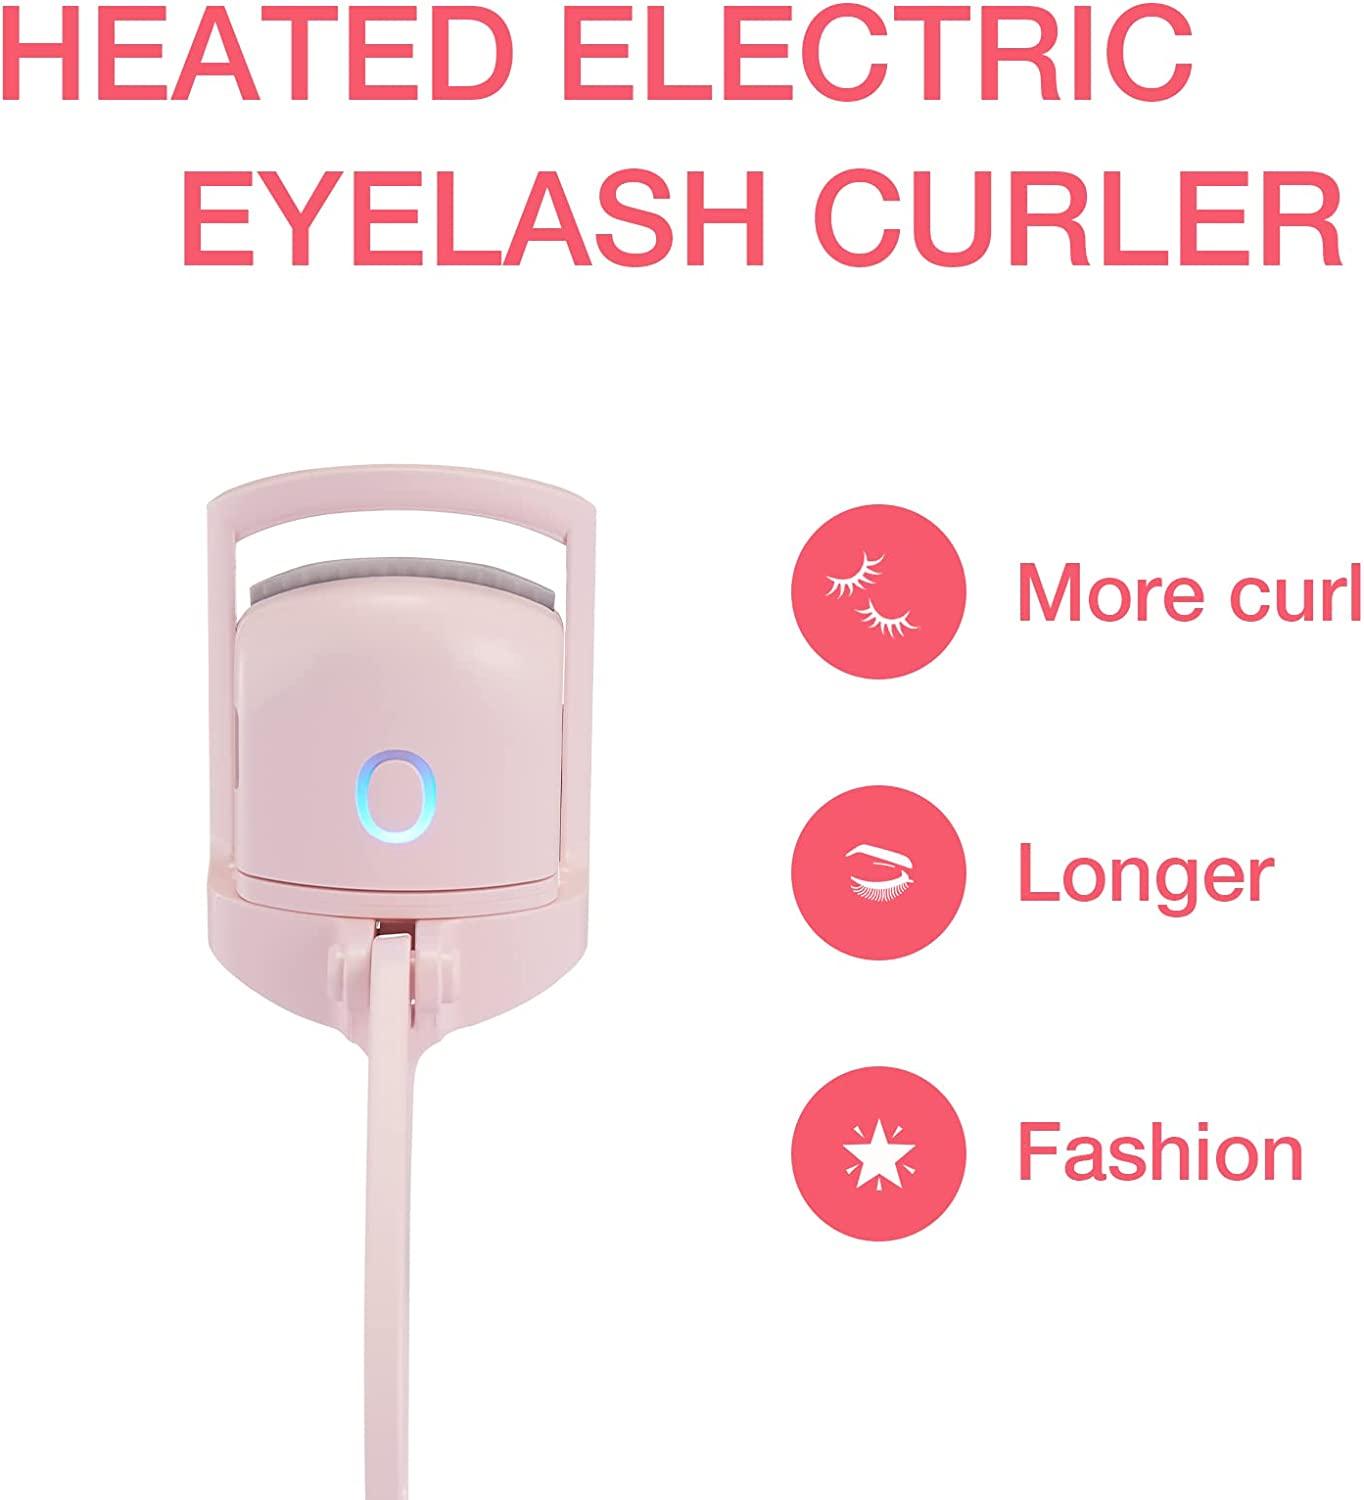 Best Eyelash Curler